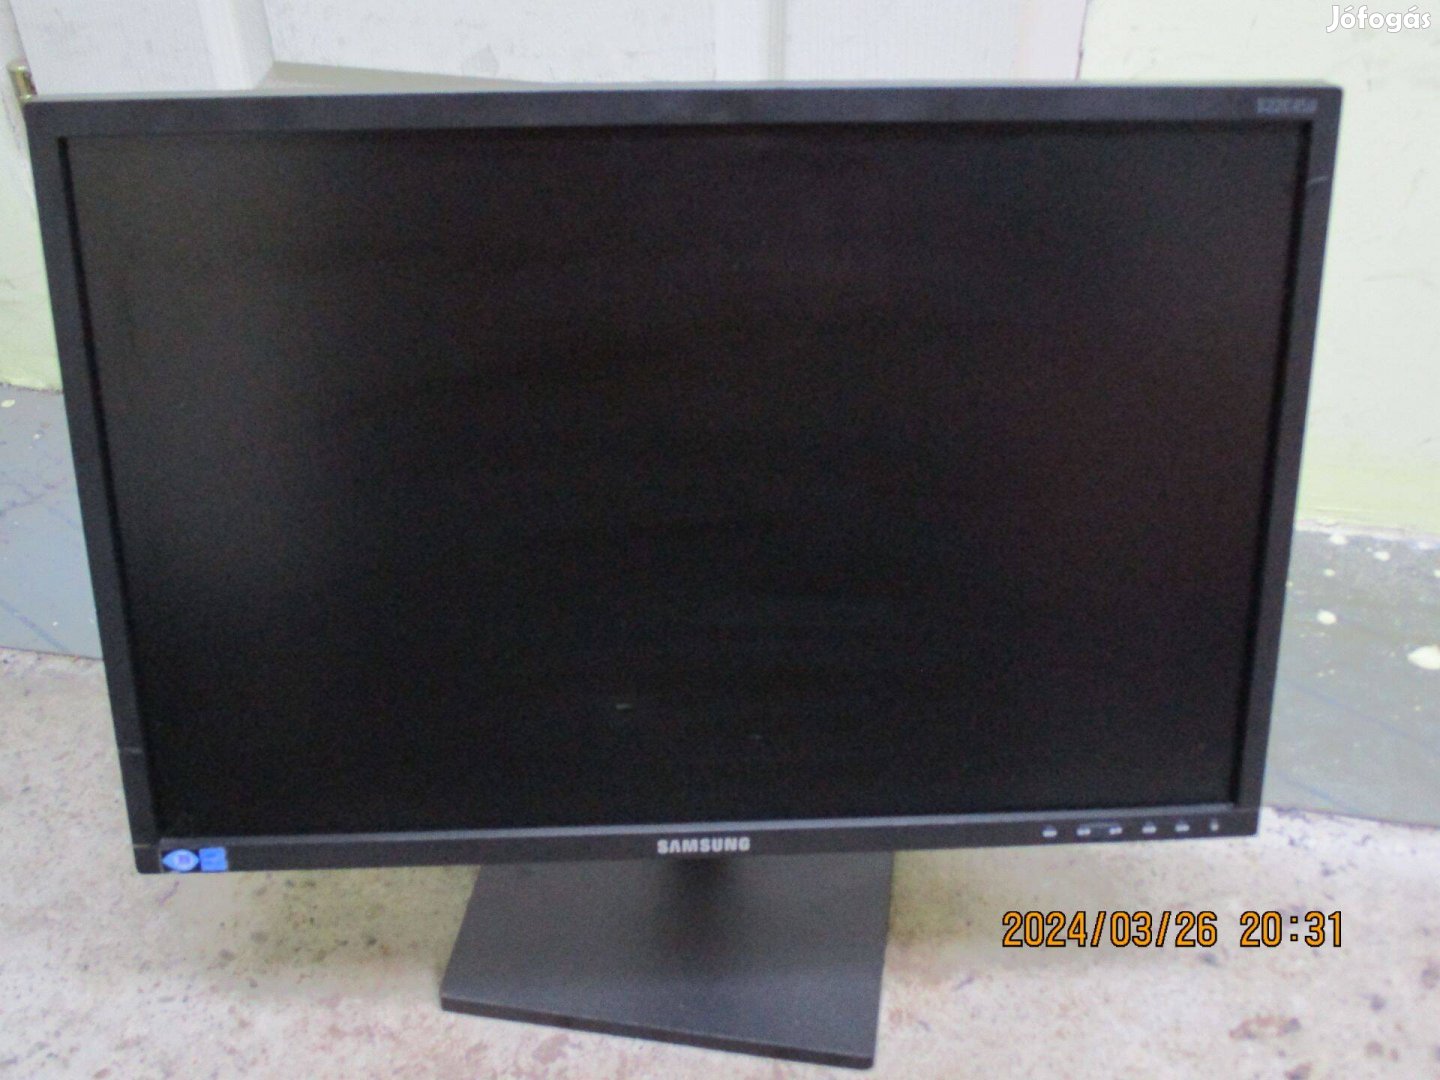 Samsung S22C450 monitor